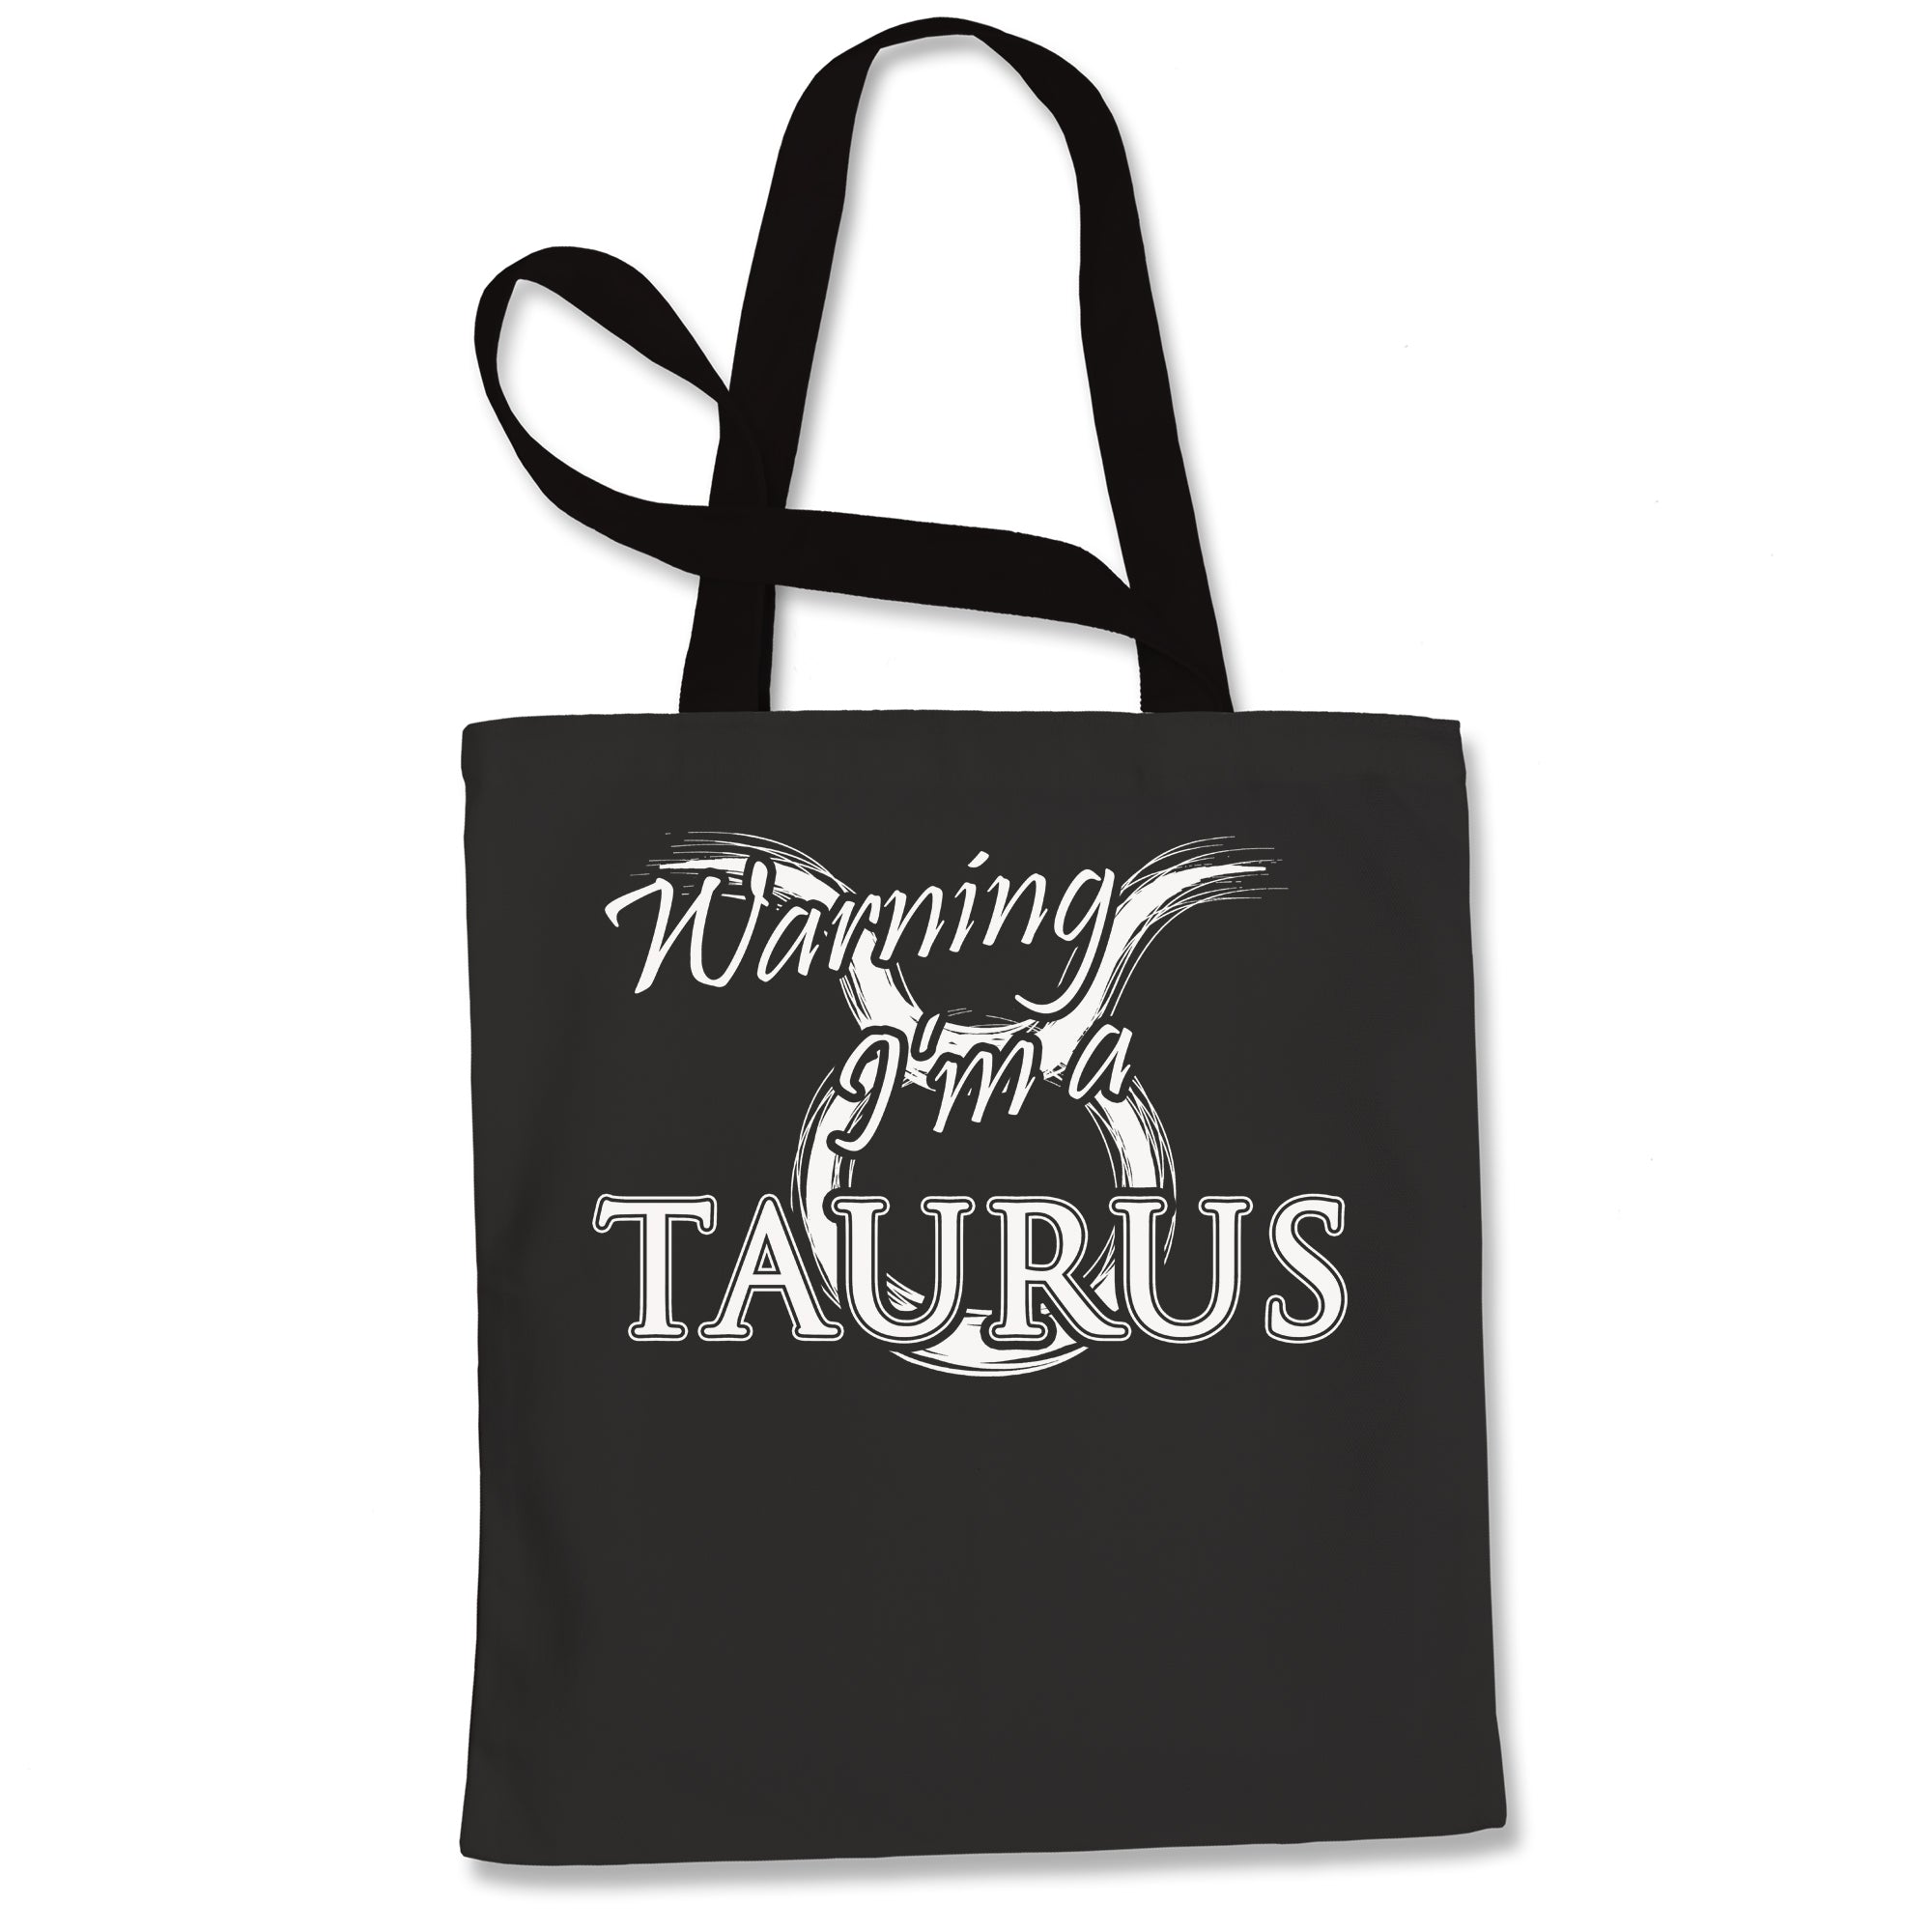 Taurus Pride Astrology Zodiac Sign Tote Bag